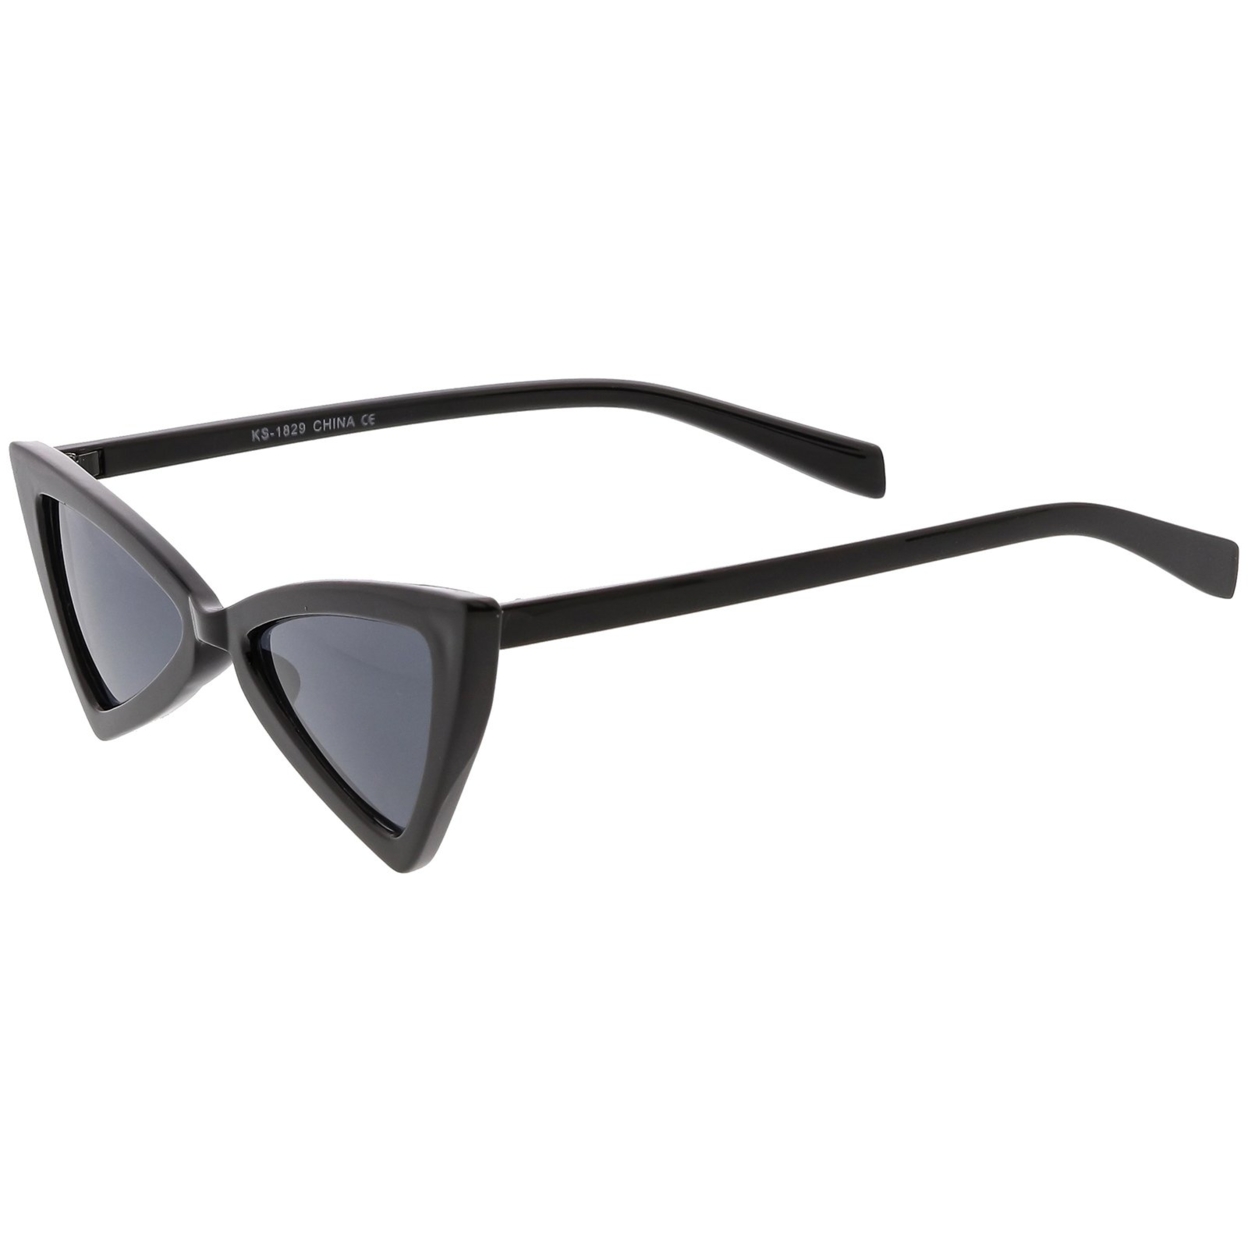 Women's Thin Extreme Cat Eye Sunglasses Neutral Colored Flat Lens 51mm - Black / Smoke